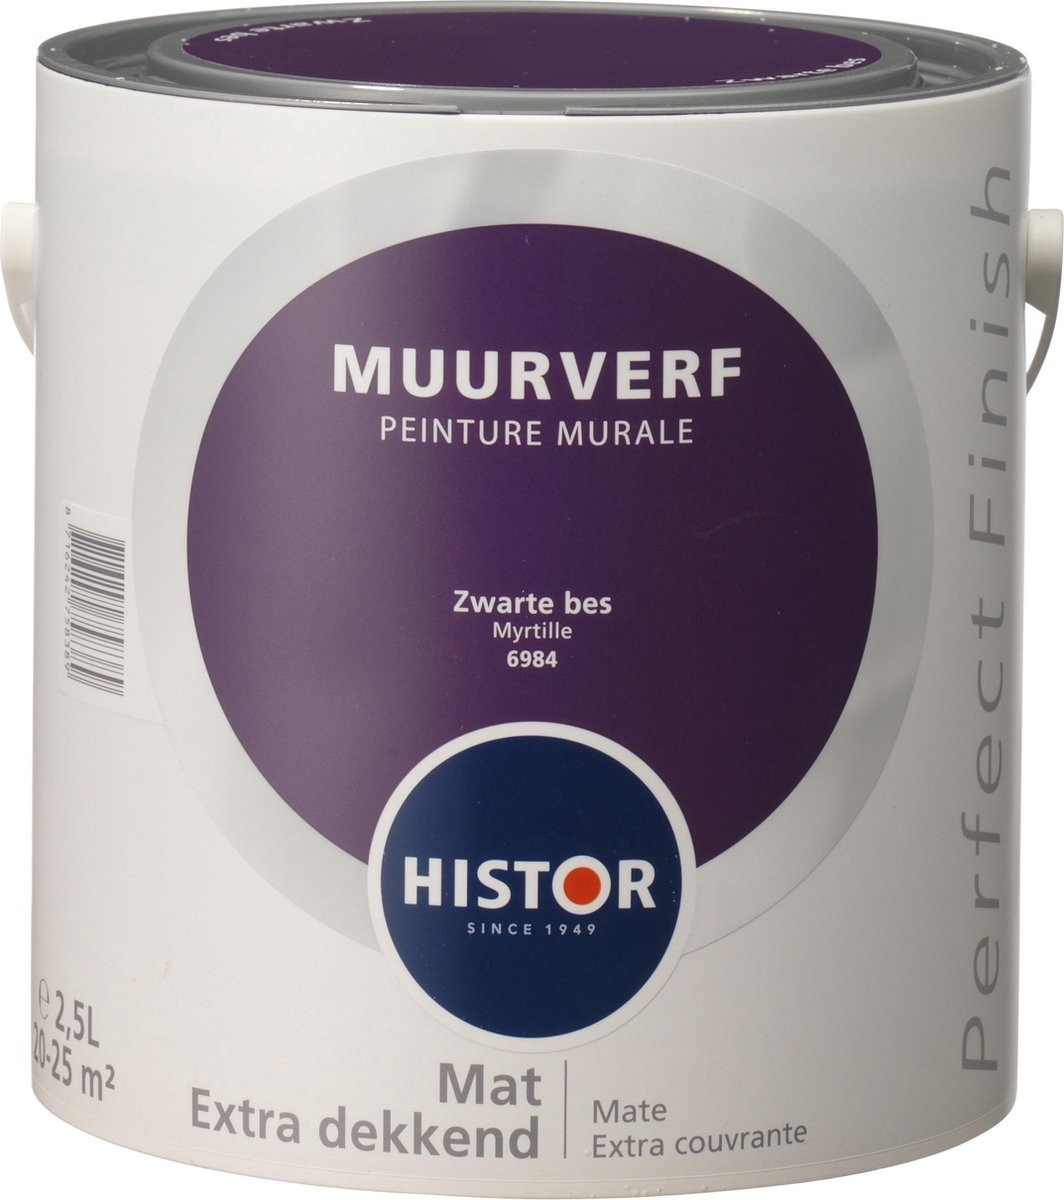 Histor Perfect Finish Muurverf Mat - Zwarte Bes - 2,5 liter